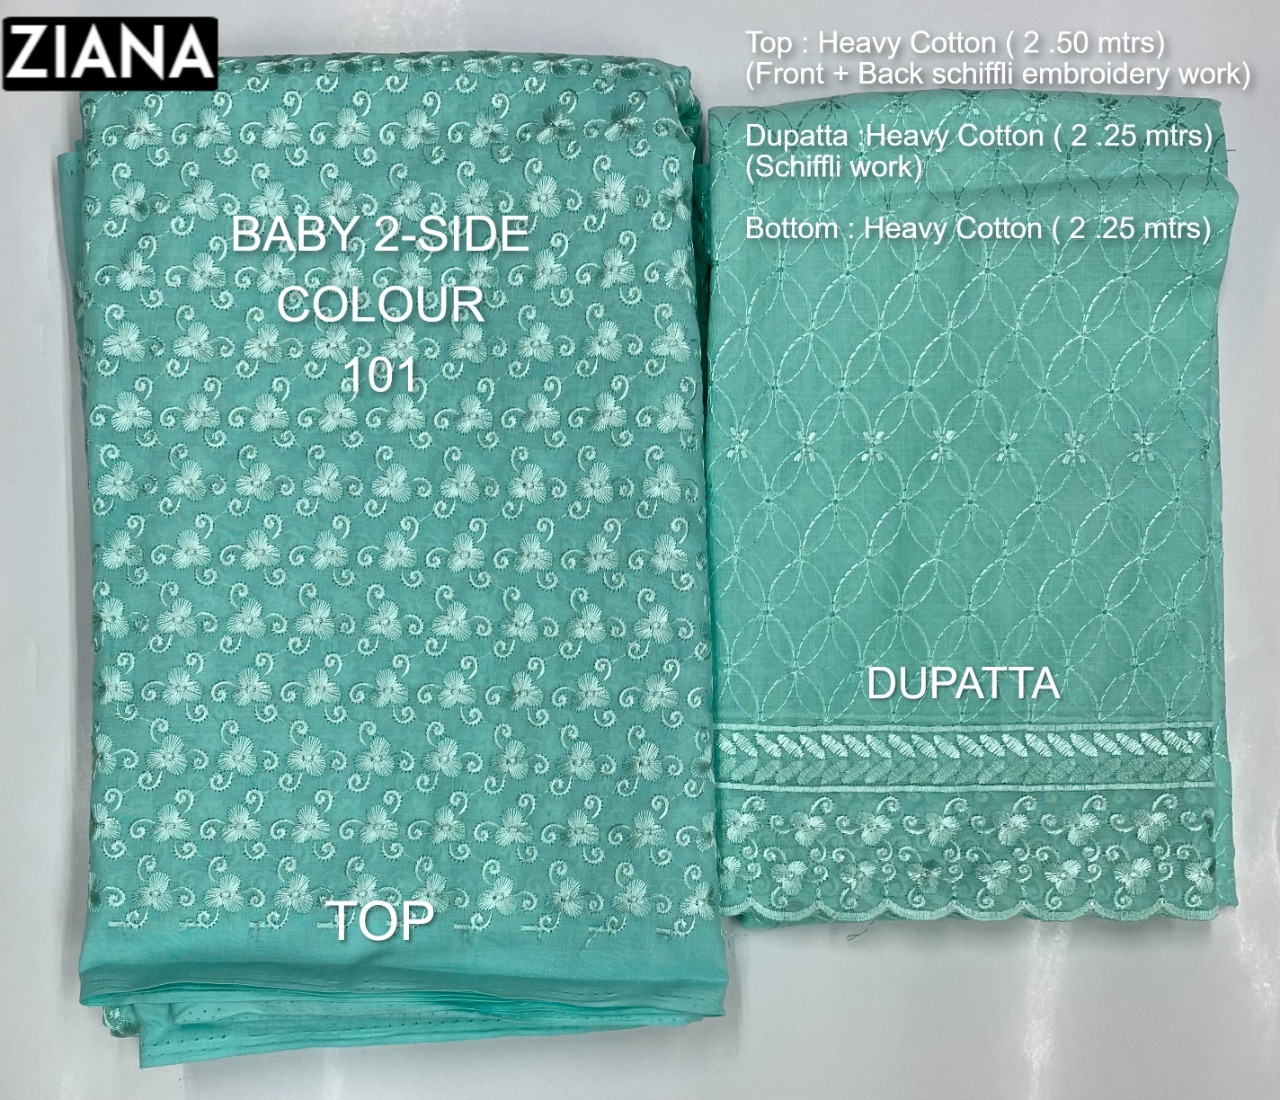 ziana baby 2 side colour 101 heavy cotton elegant look embroidery salwar suit colour set